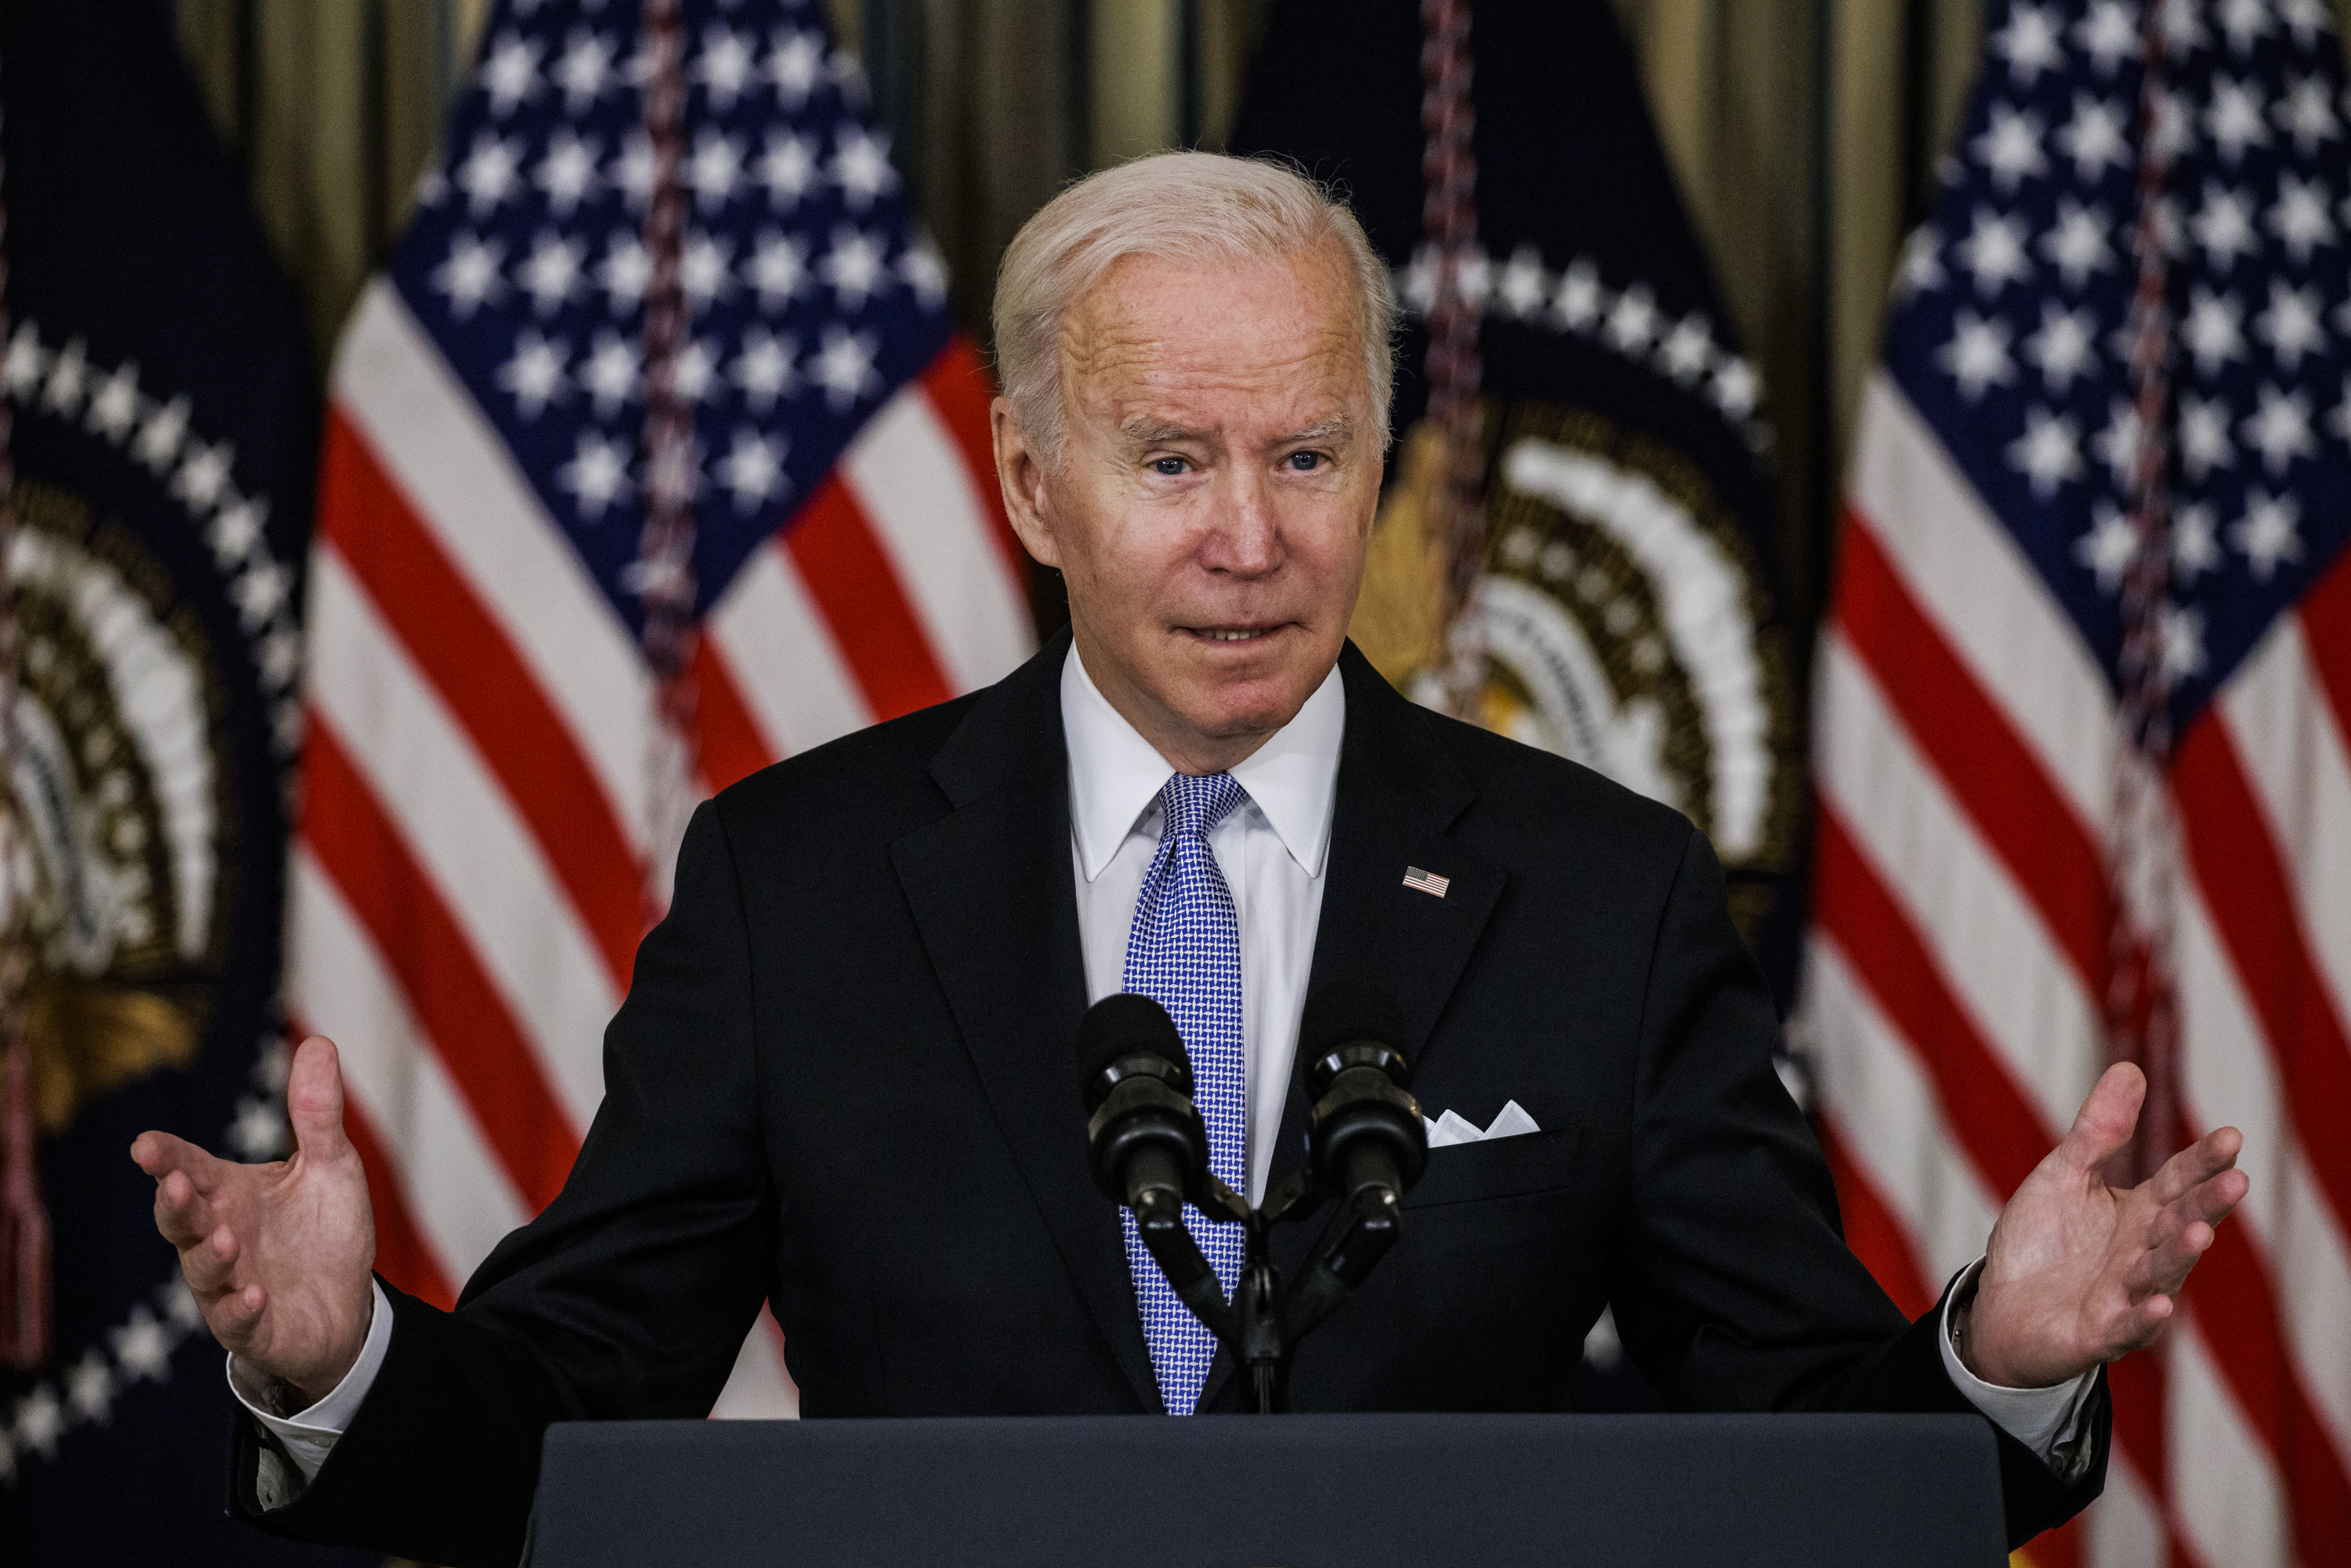 President Joe Biden at a press conference